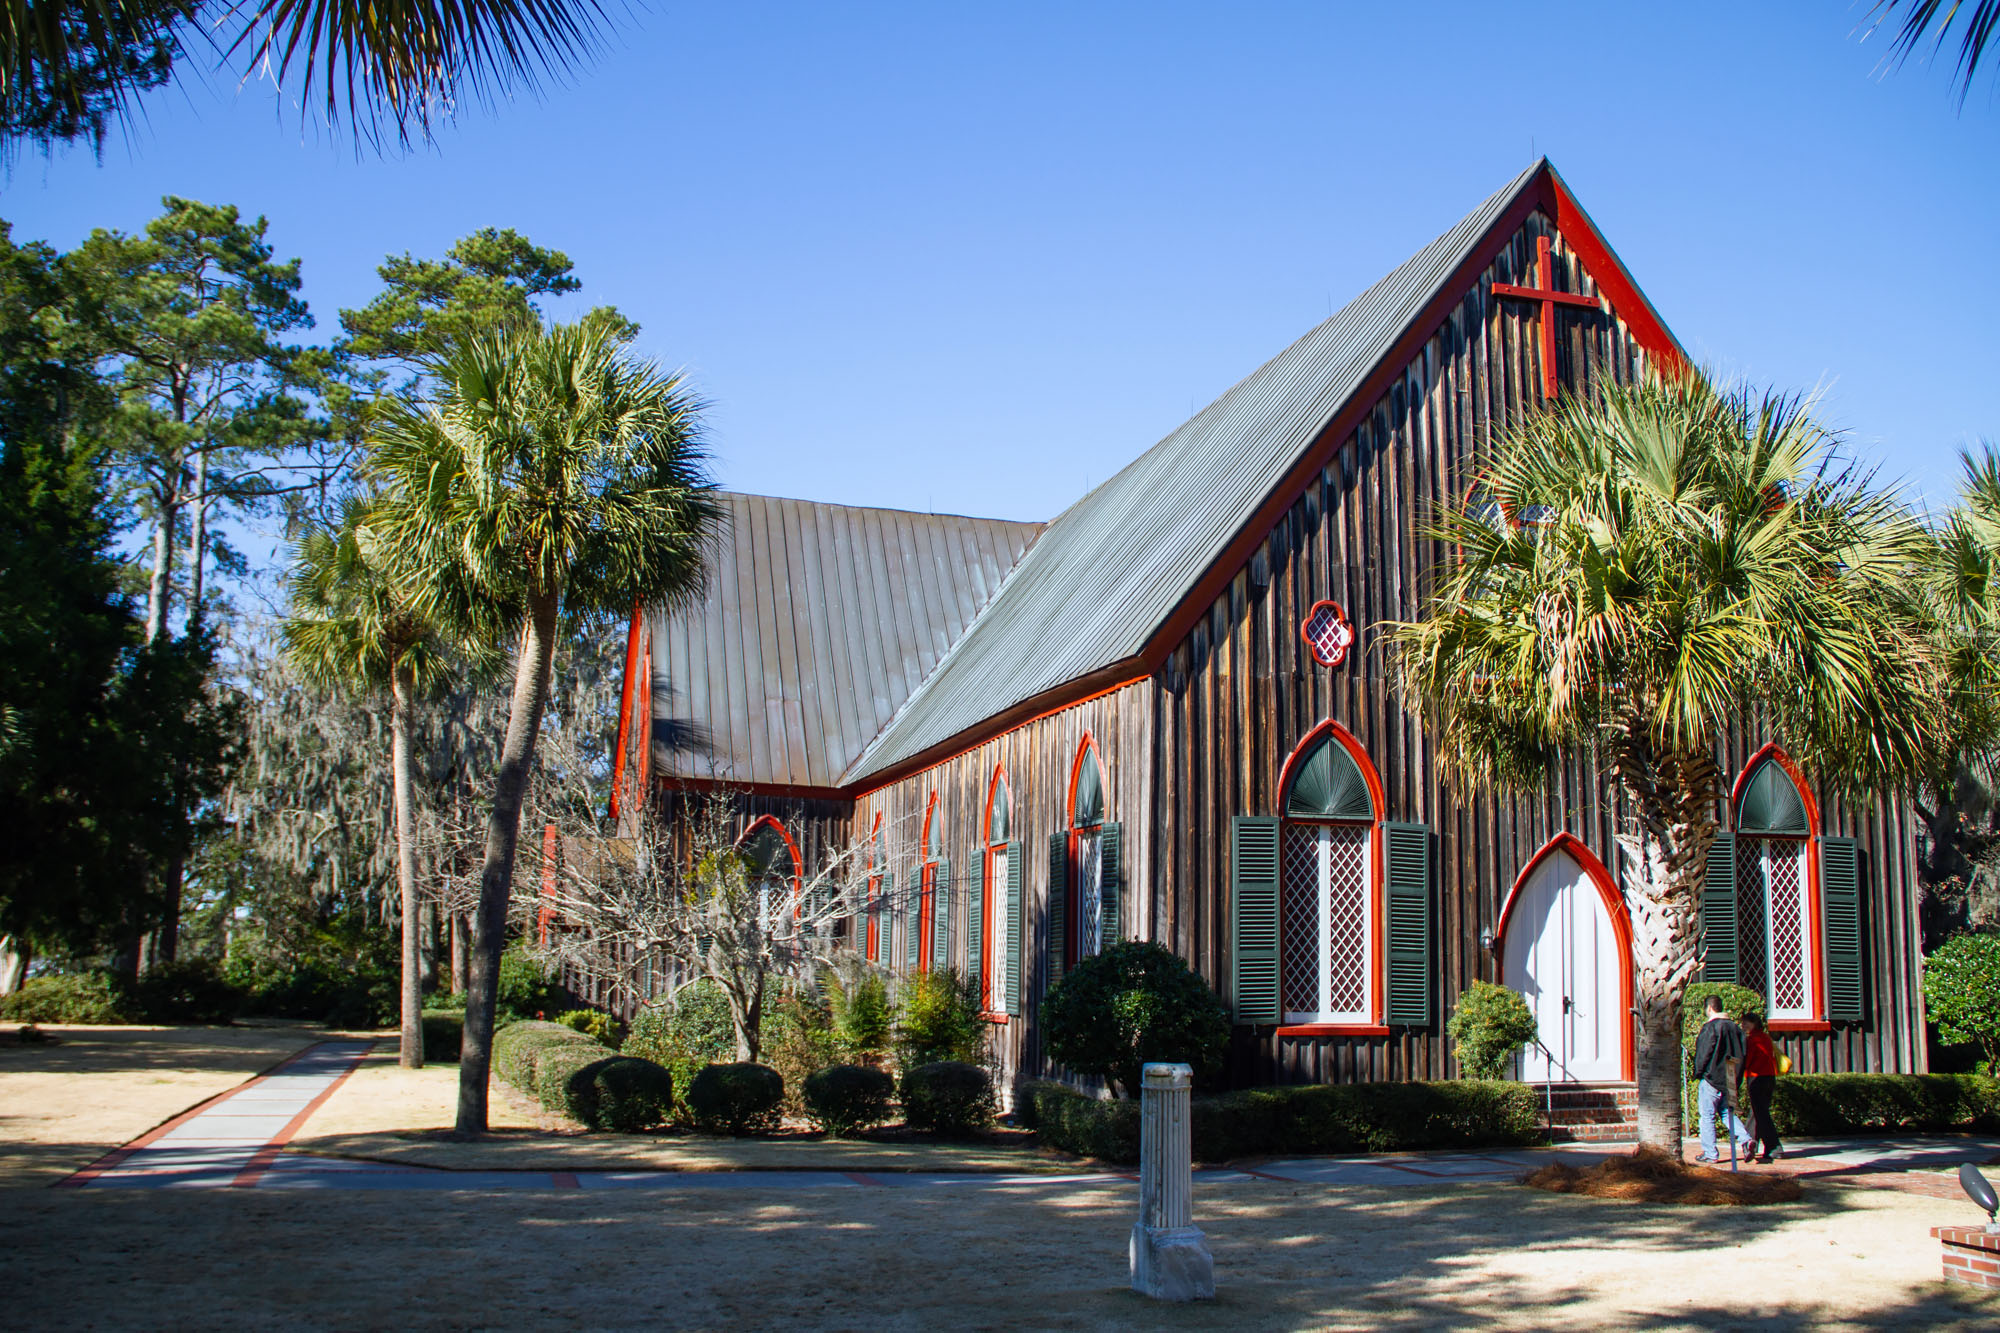 Bluffton South Carolina wooden church